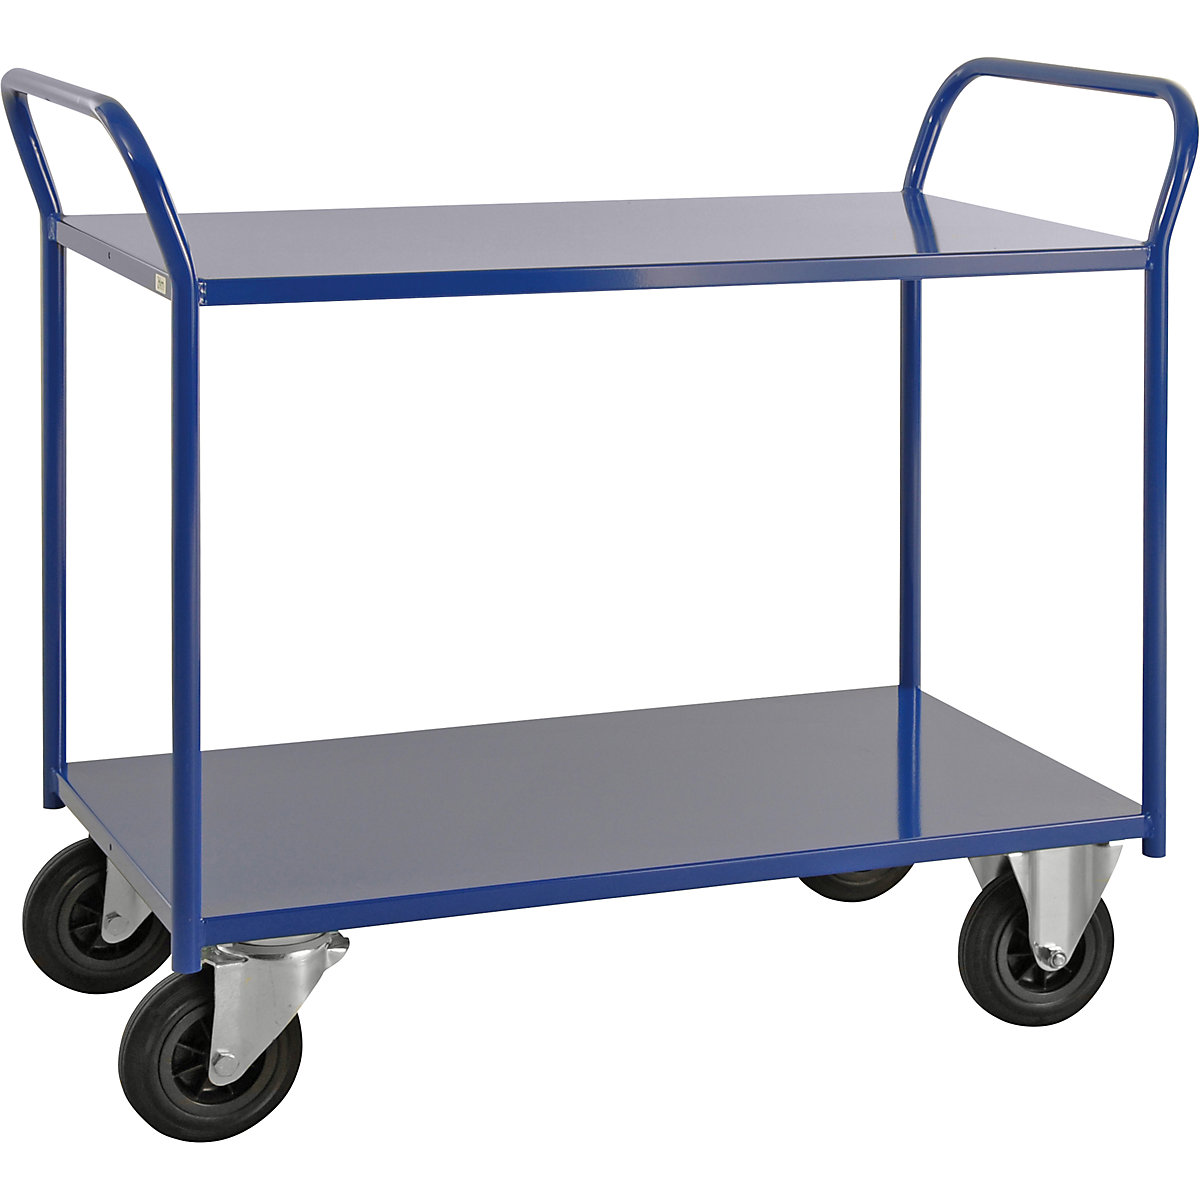 KM41 table trolley – Kongamek, 2 shelves, LxWxH 1080 x 450 x 975 mm, blue, 2 swivel castors and 2 fixed castors, 5+ items-5